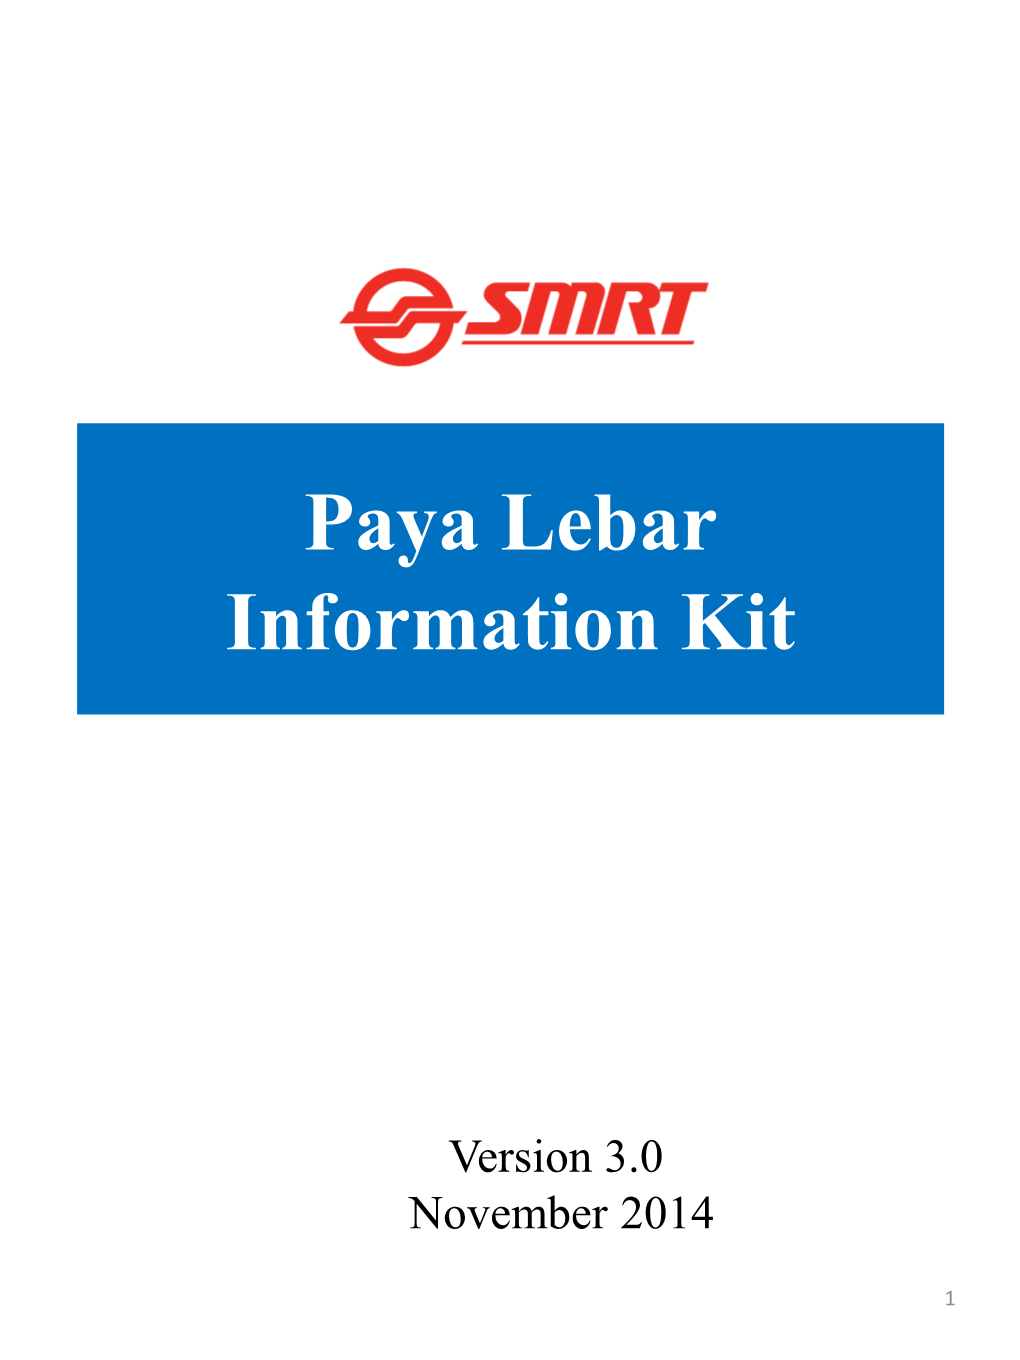 Paya Lebar Information Kit